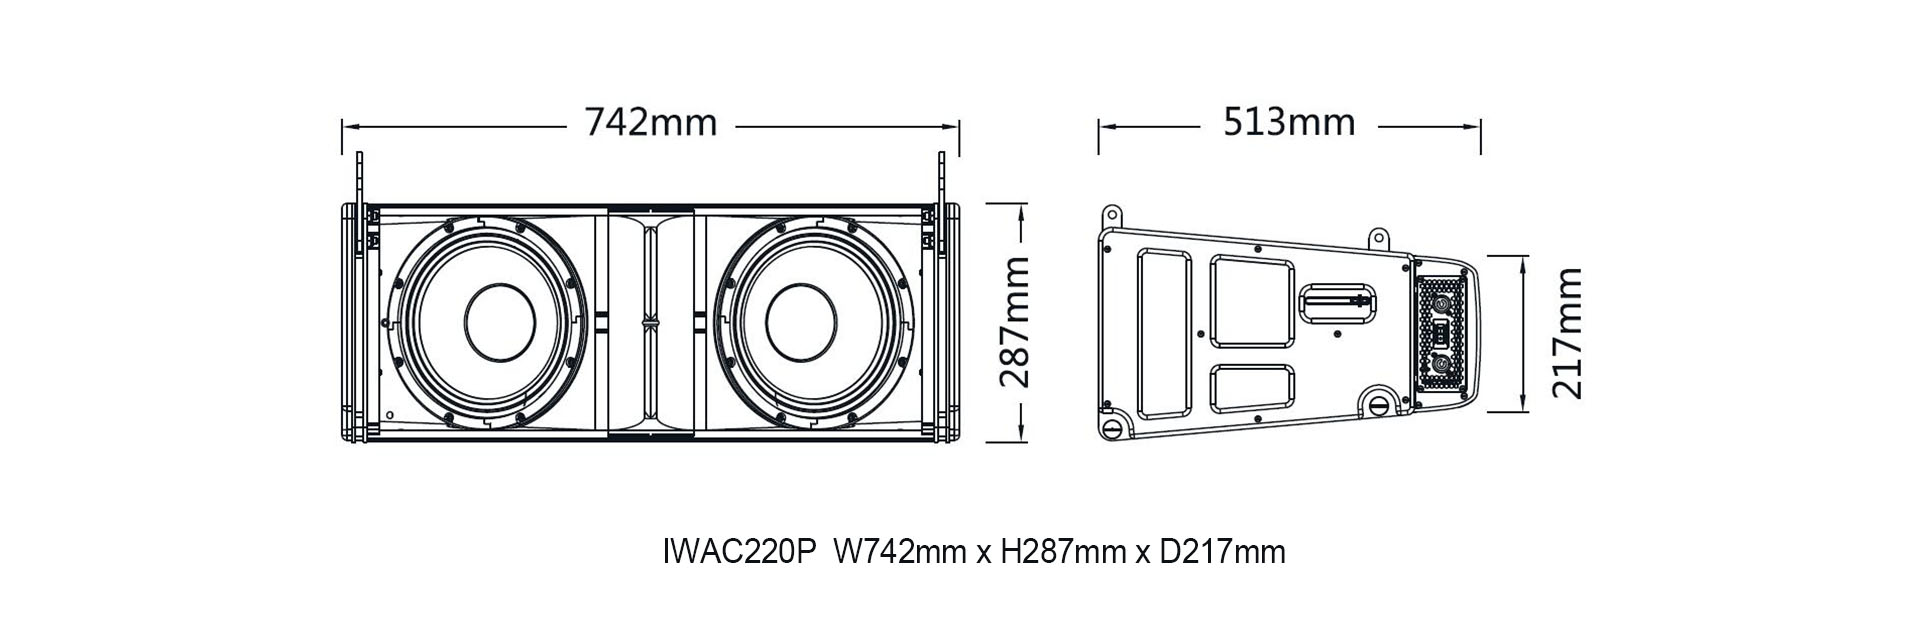 IWAC220P size